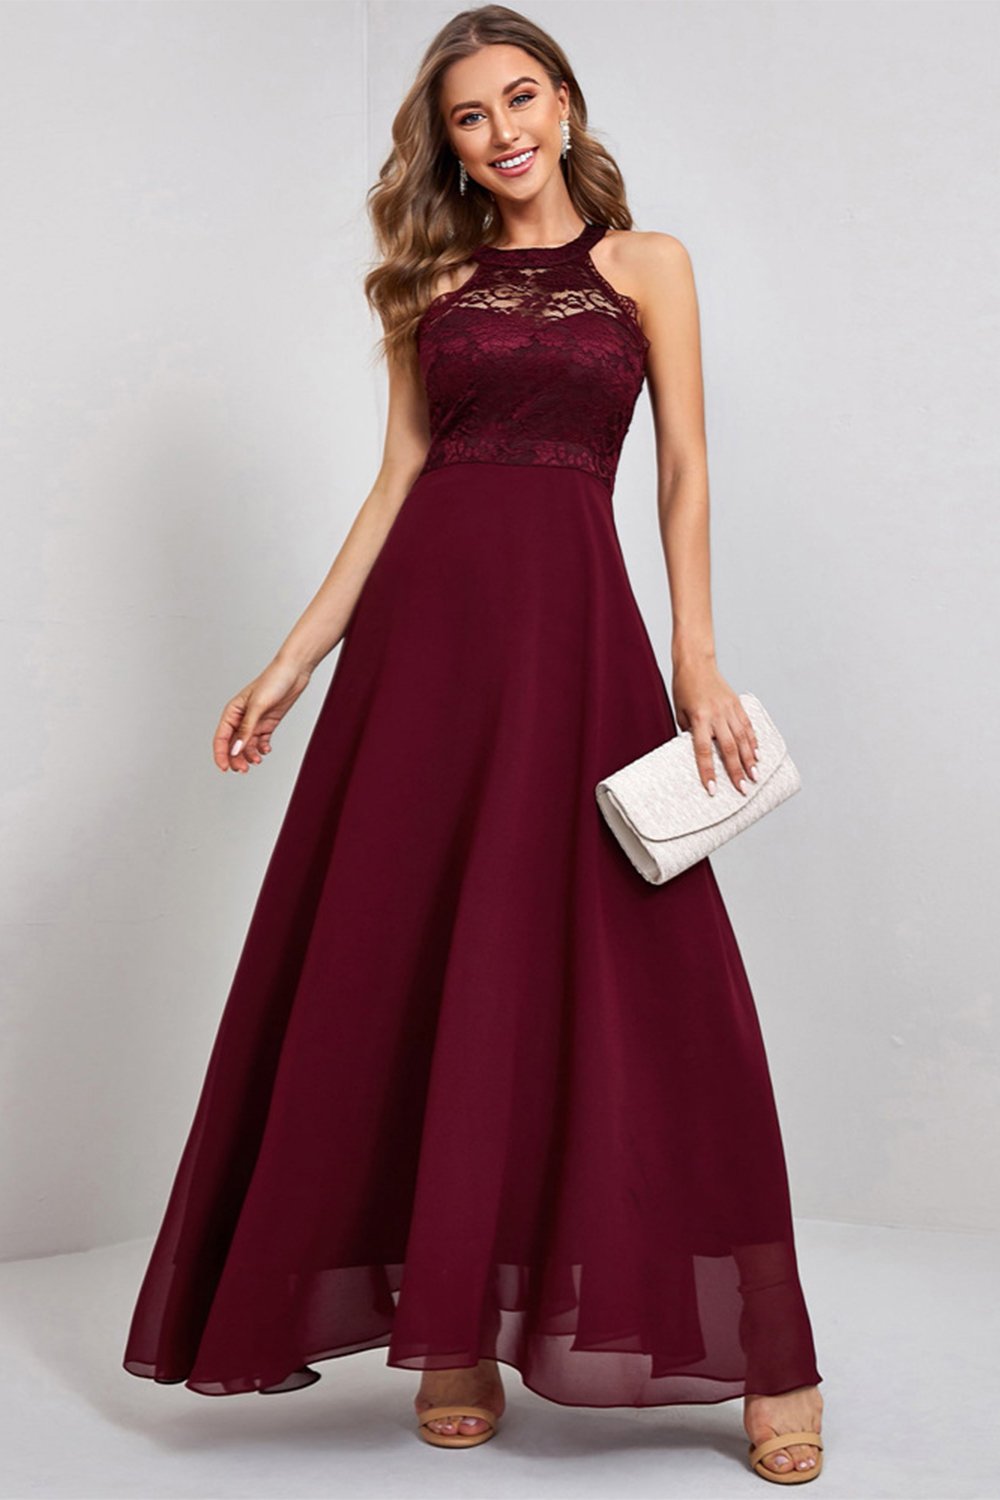 Burgundy Long Lace Party Dress